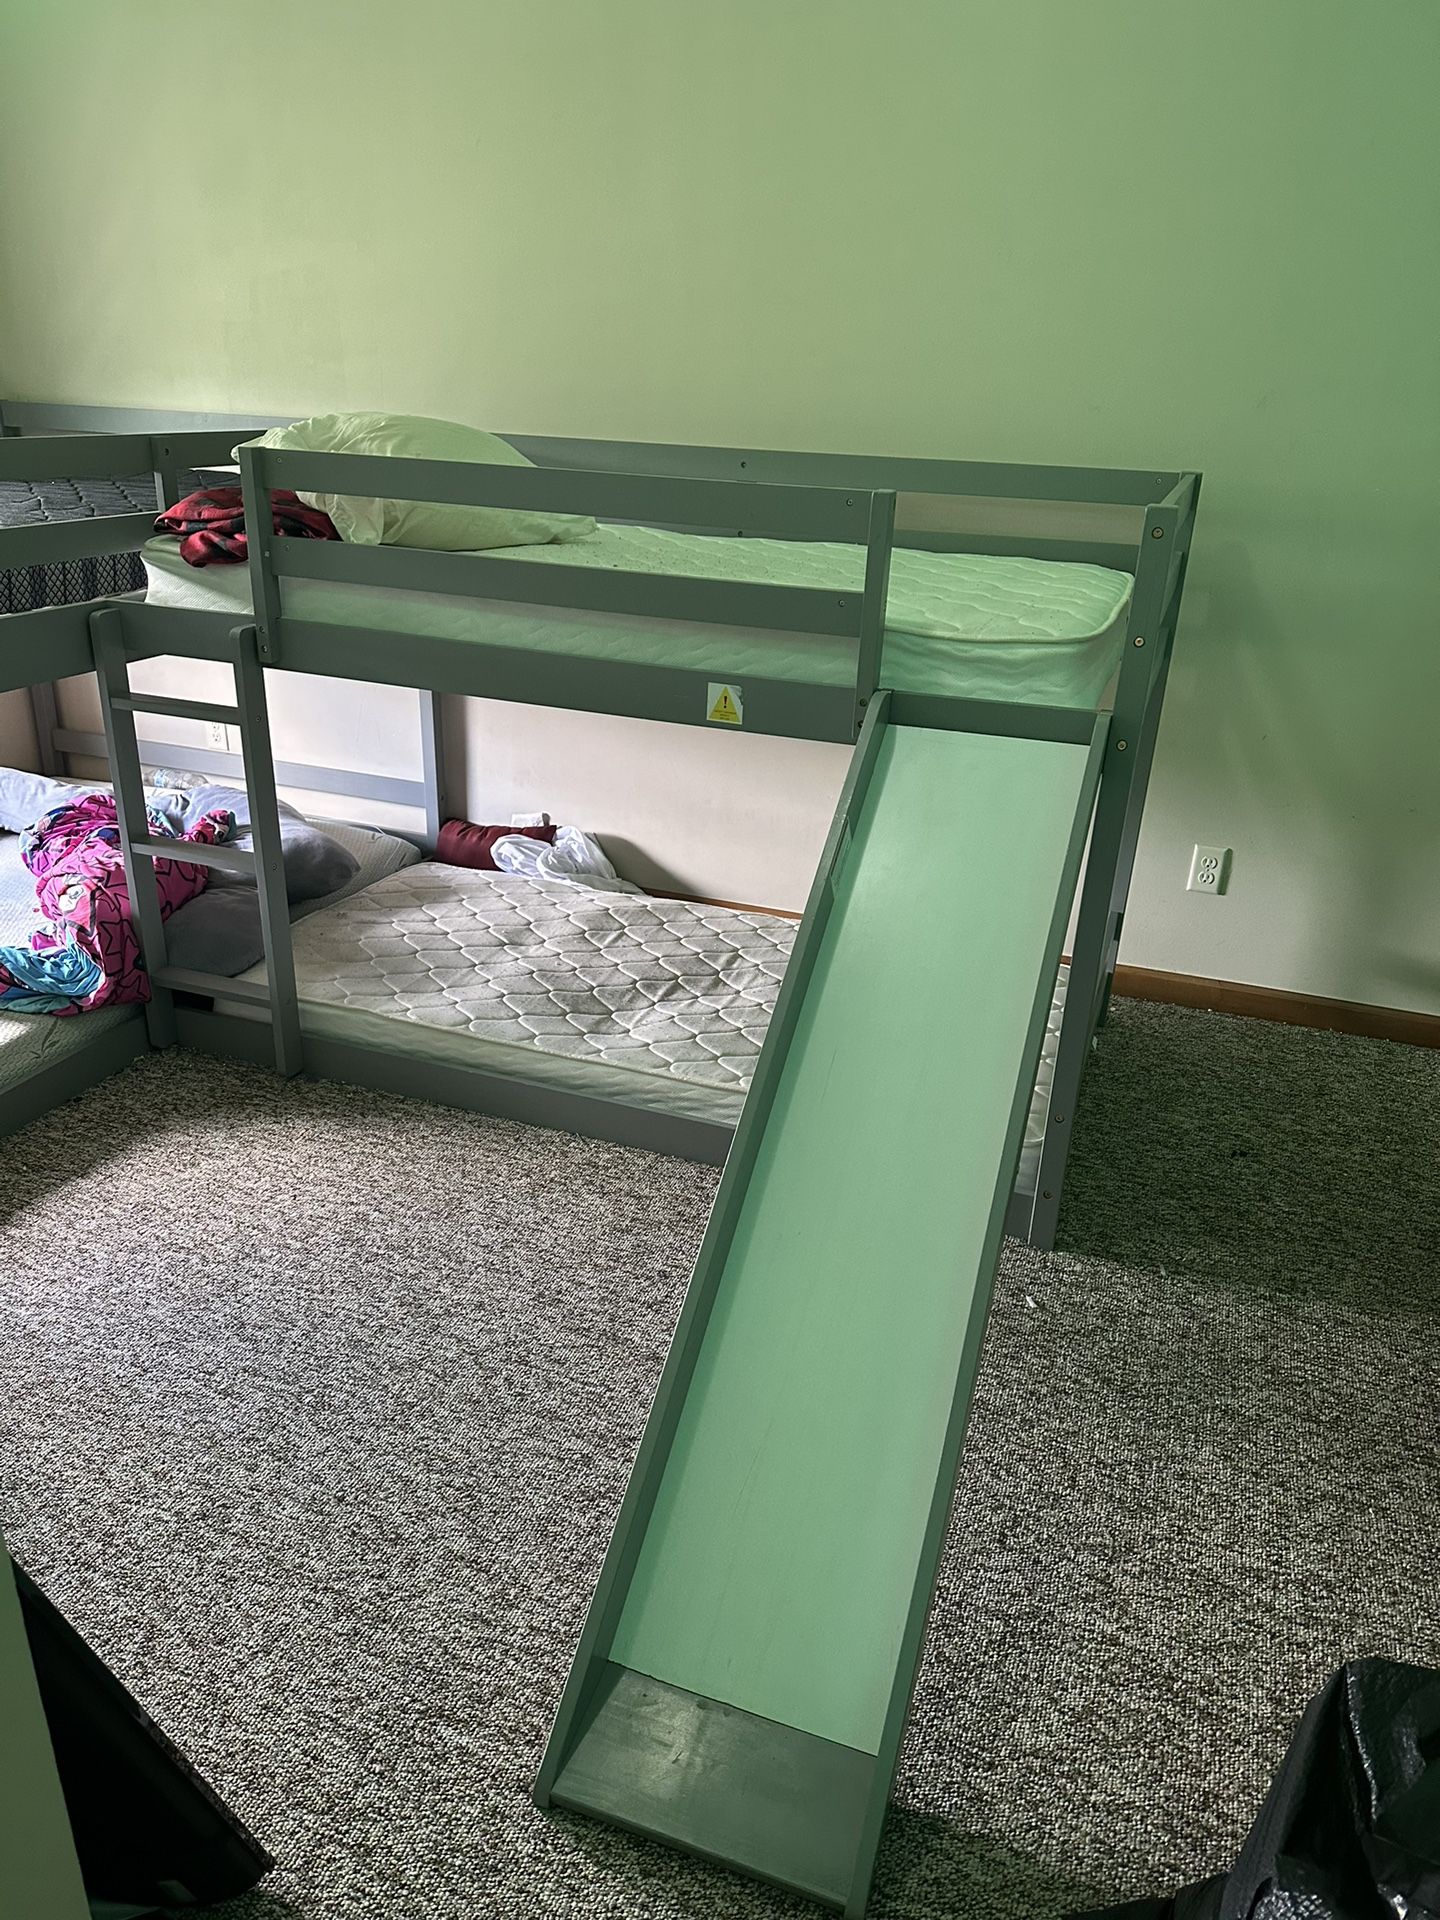 Light Grey 4 Bed Bunk Beds With Slide